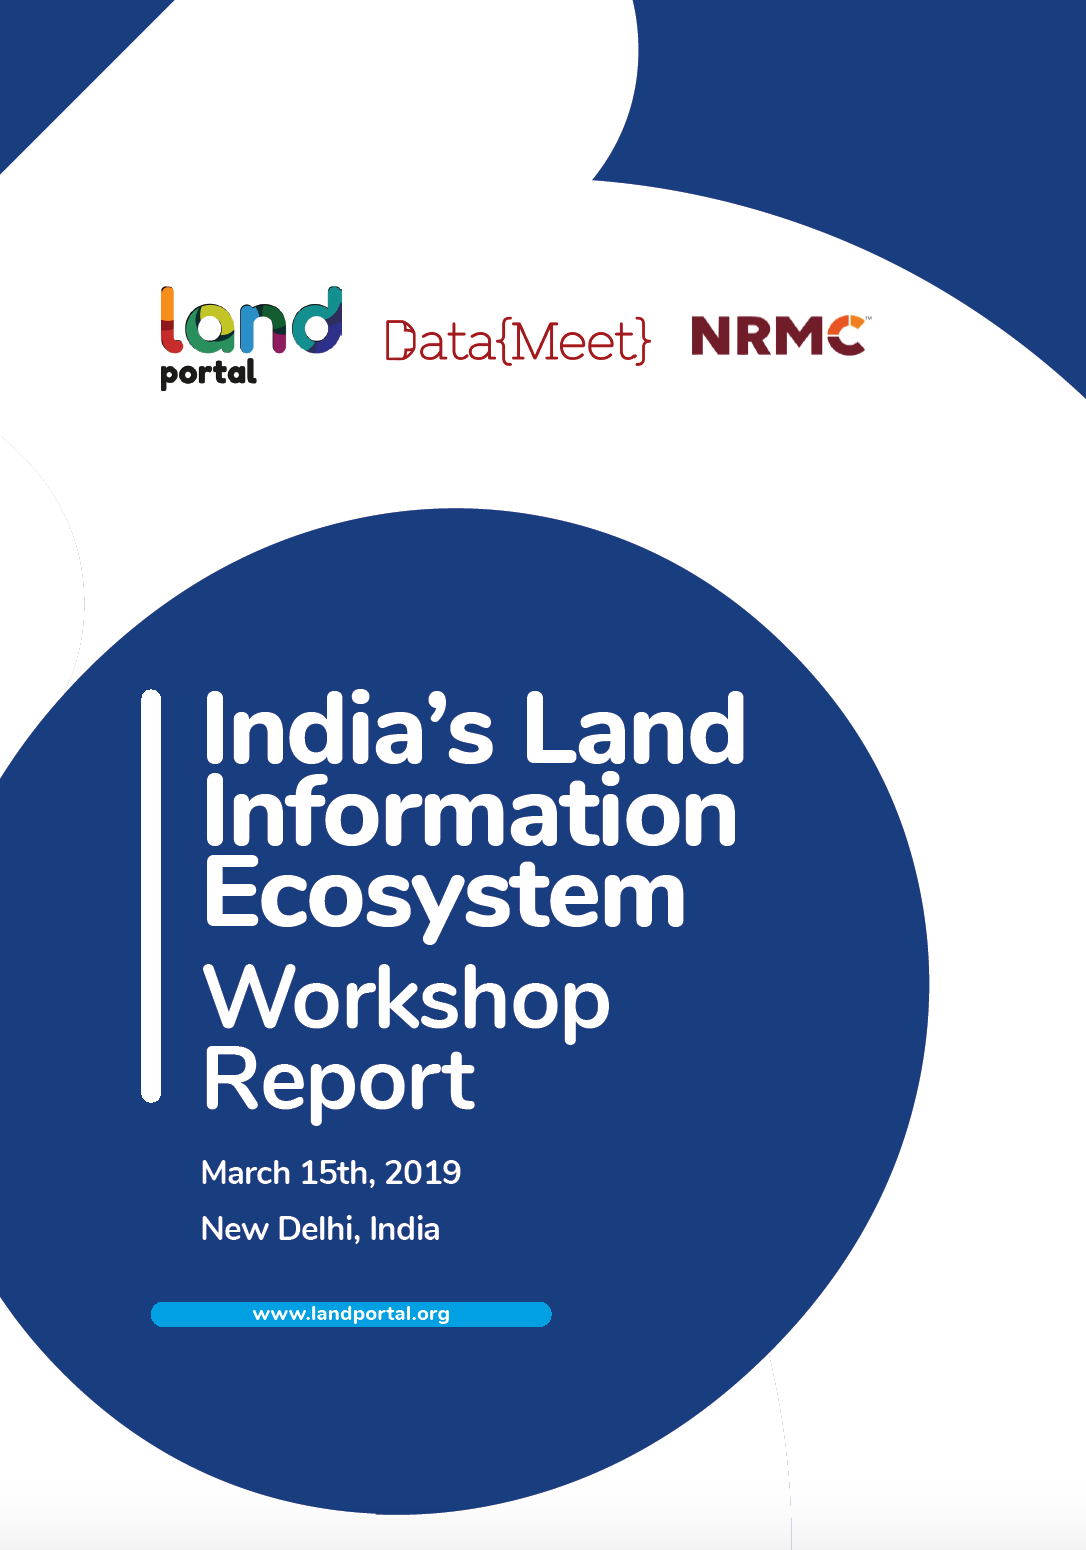 India's Land Information Ecosystem workshop report cover image